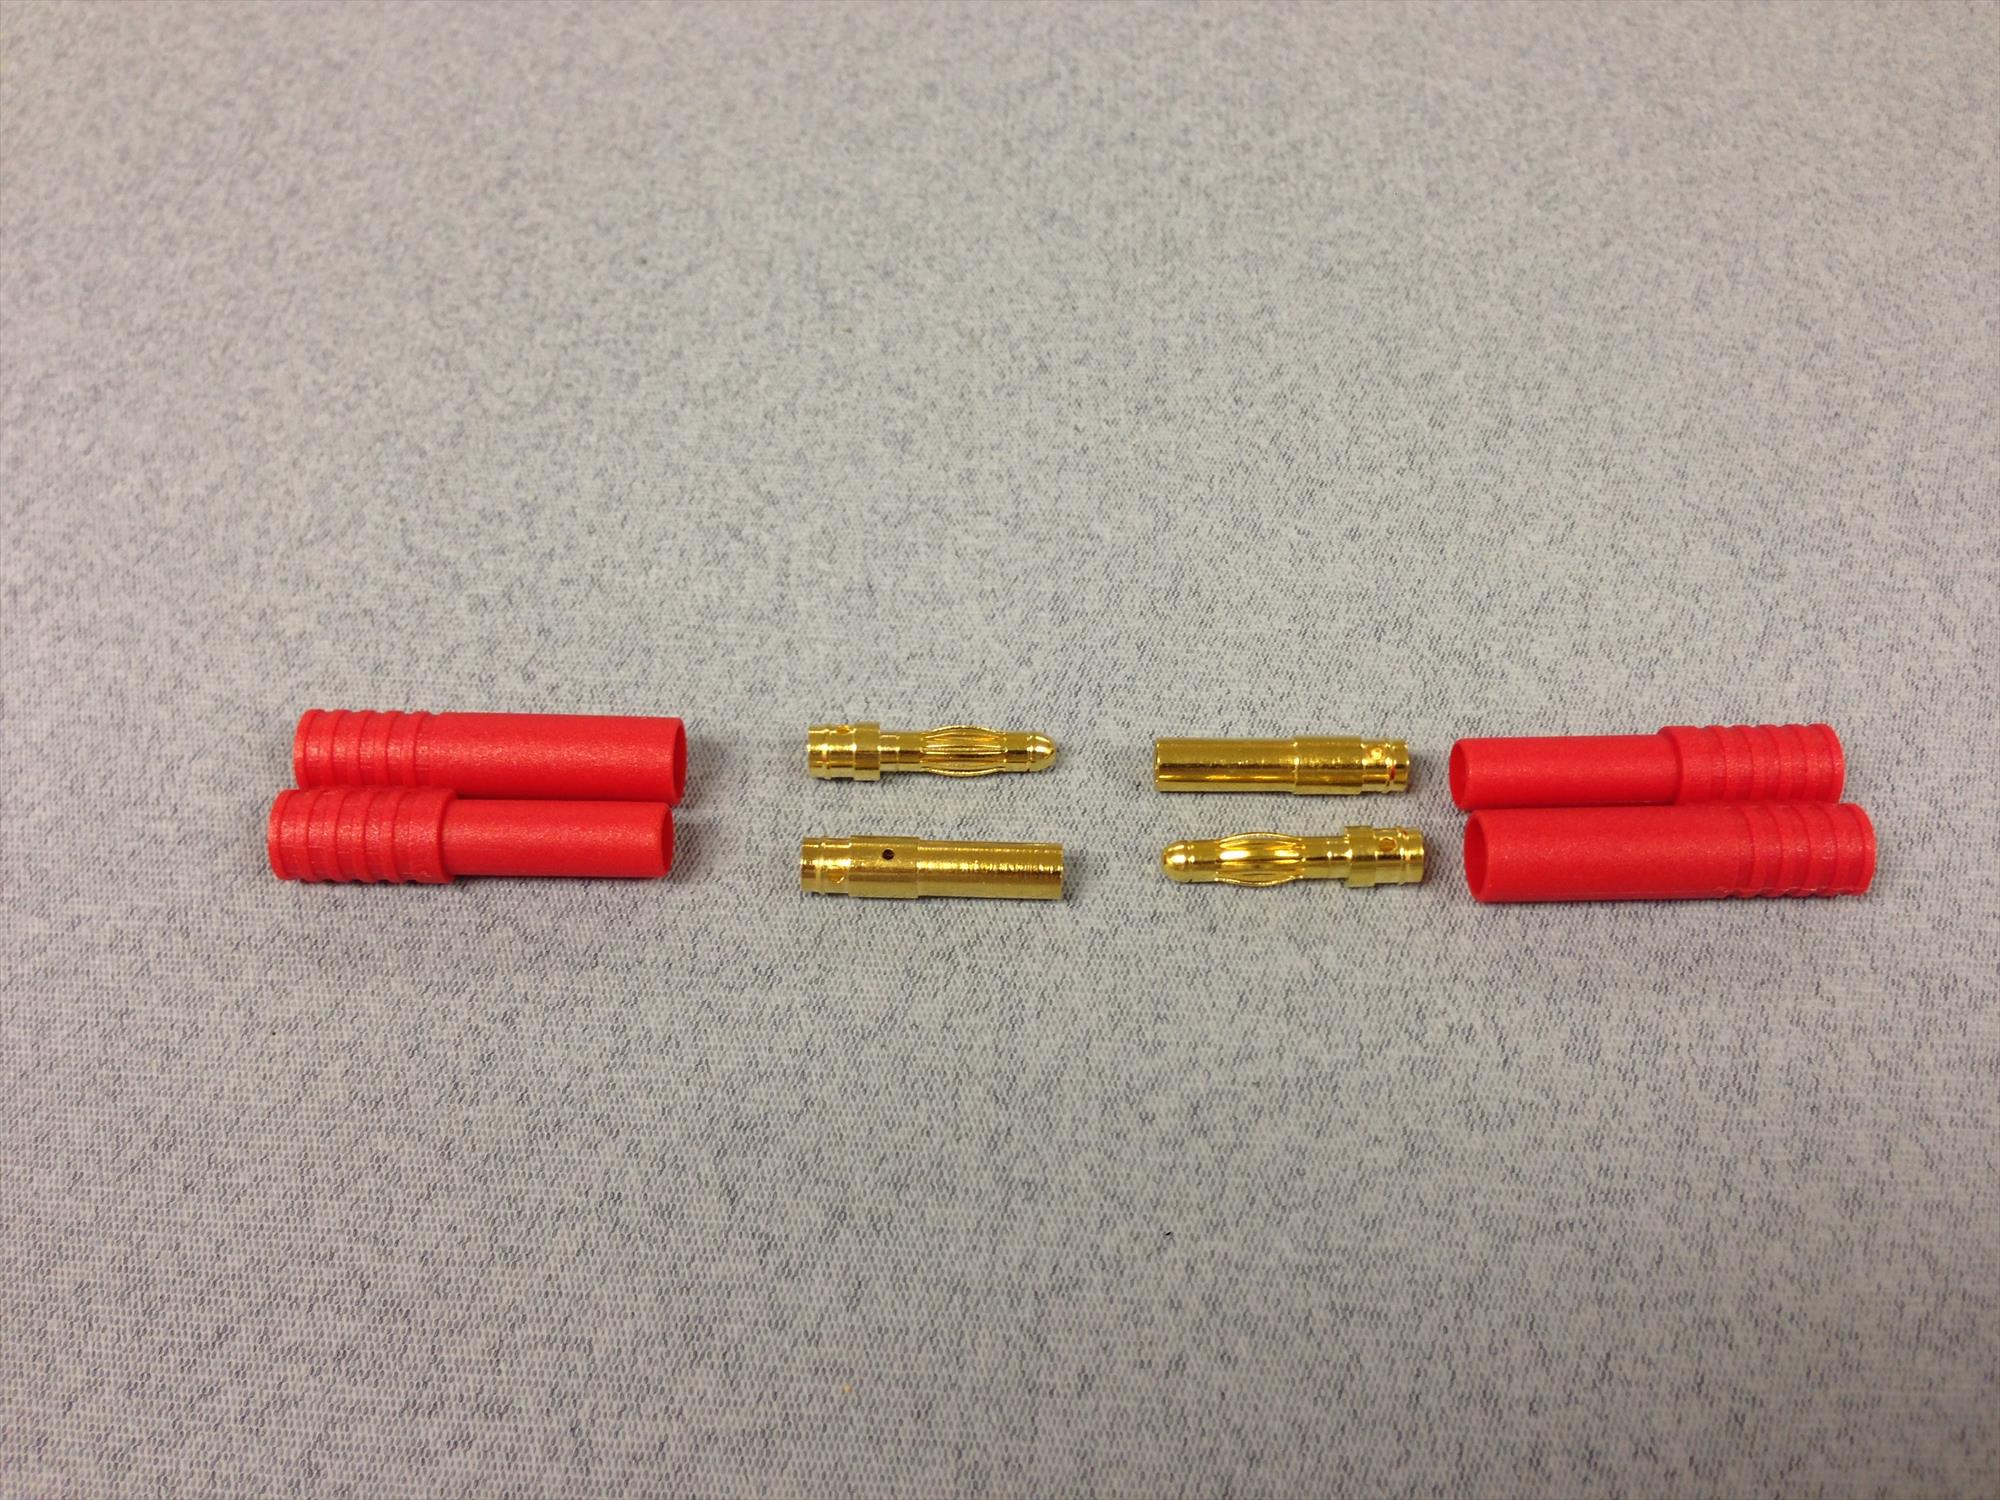 LOGIC RC 4.0mm Gold Connector Set 2prs